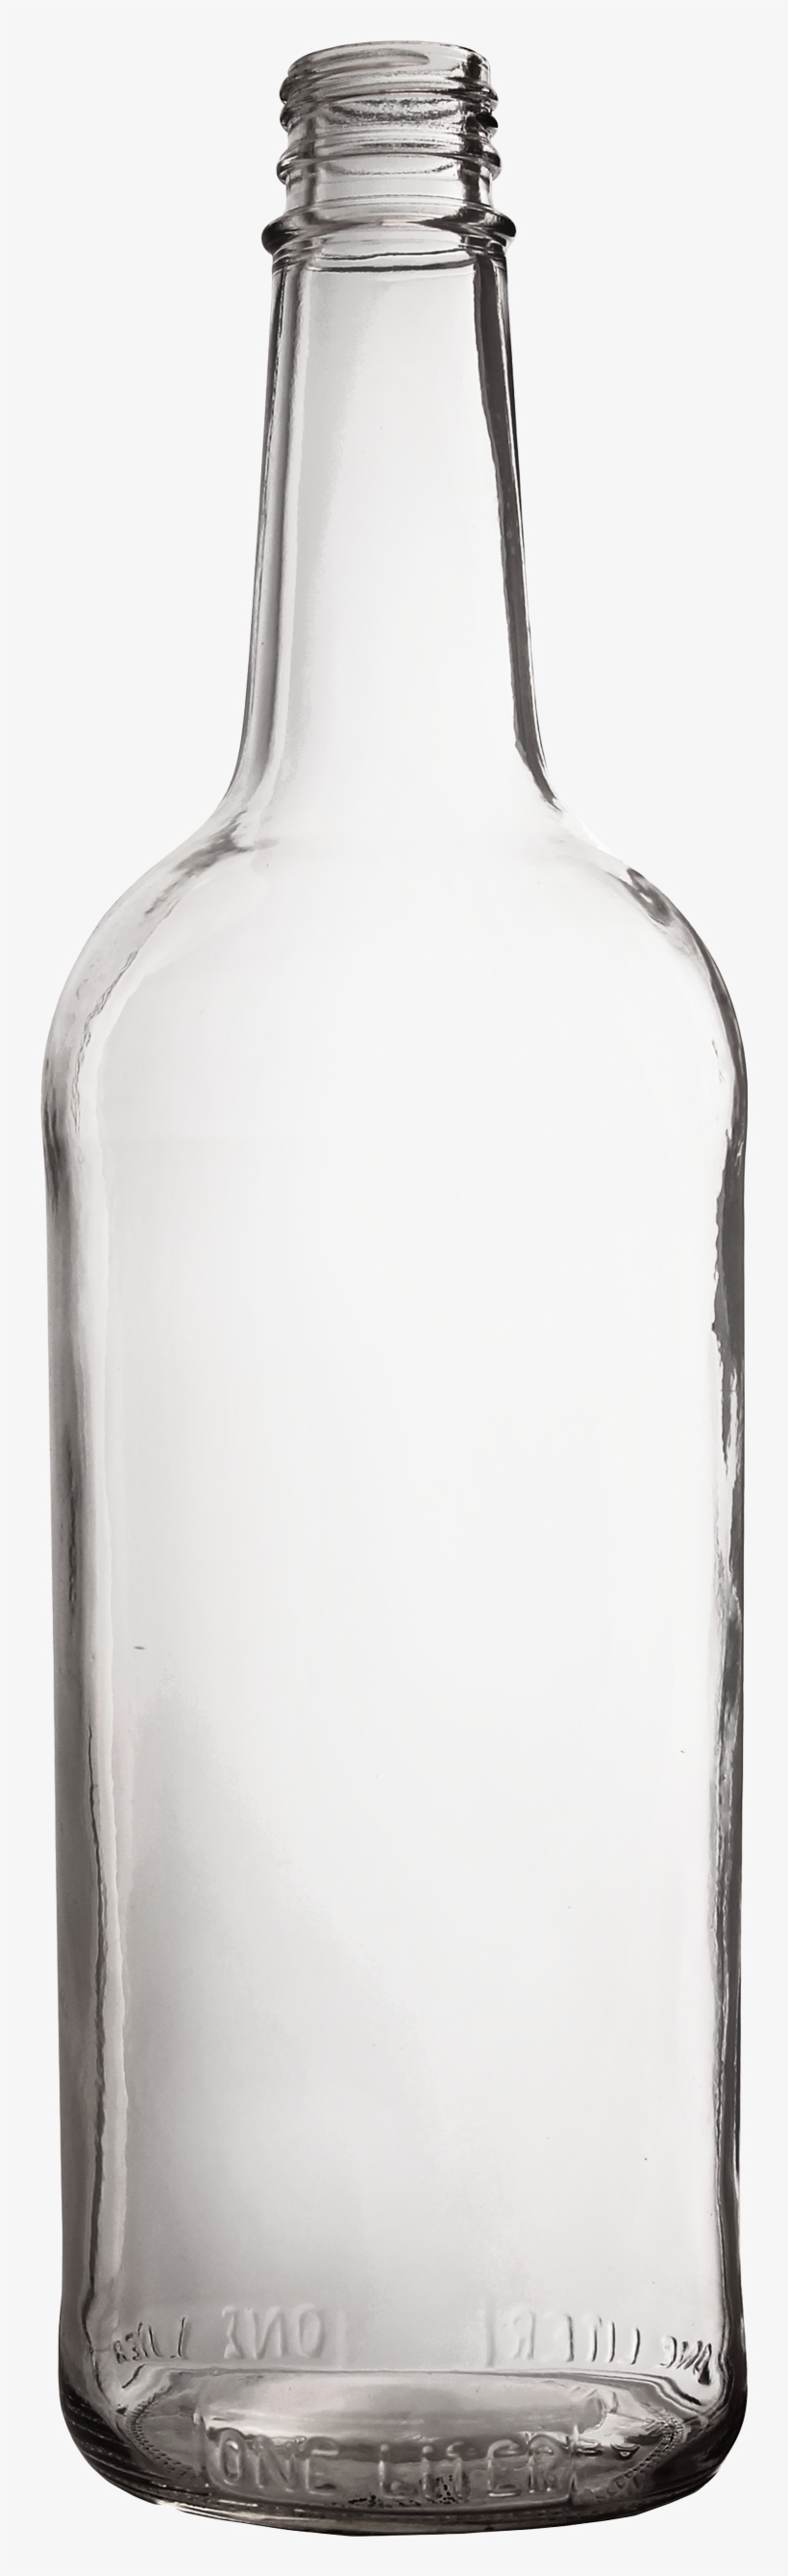 Glass Bottle Png Transparent Image - Glass Bottle Png, transparent png #50801